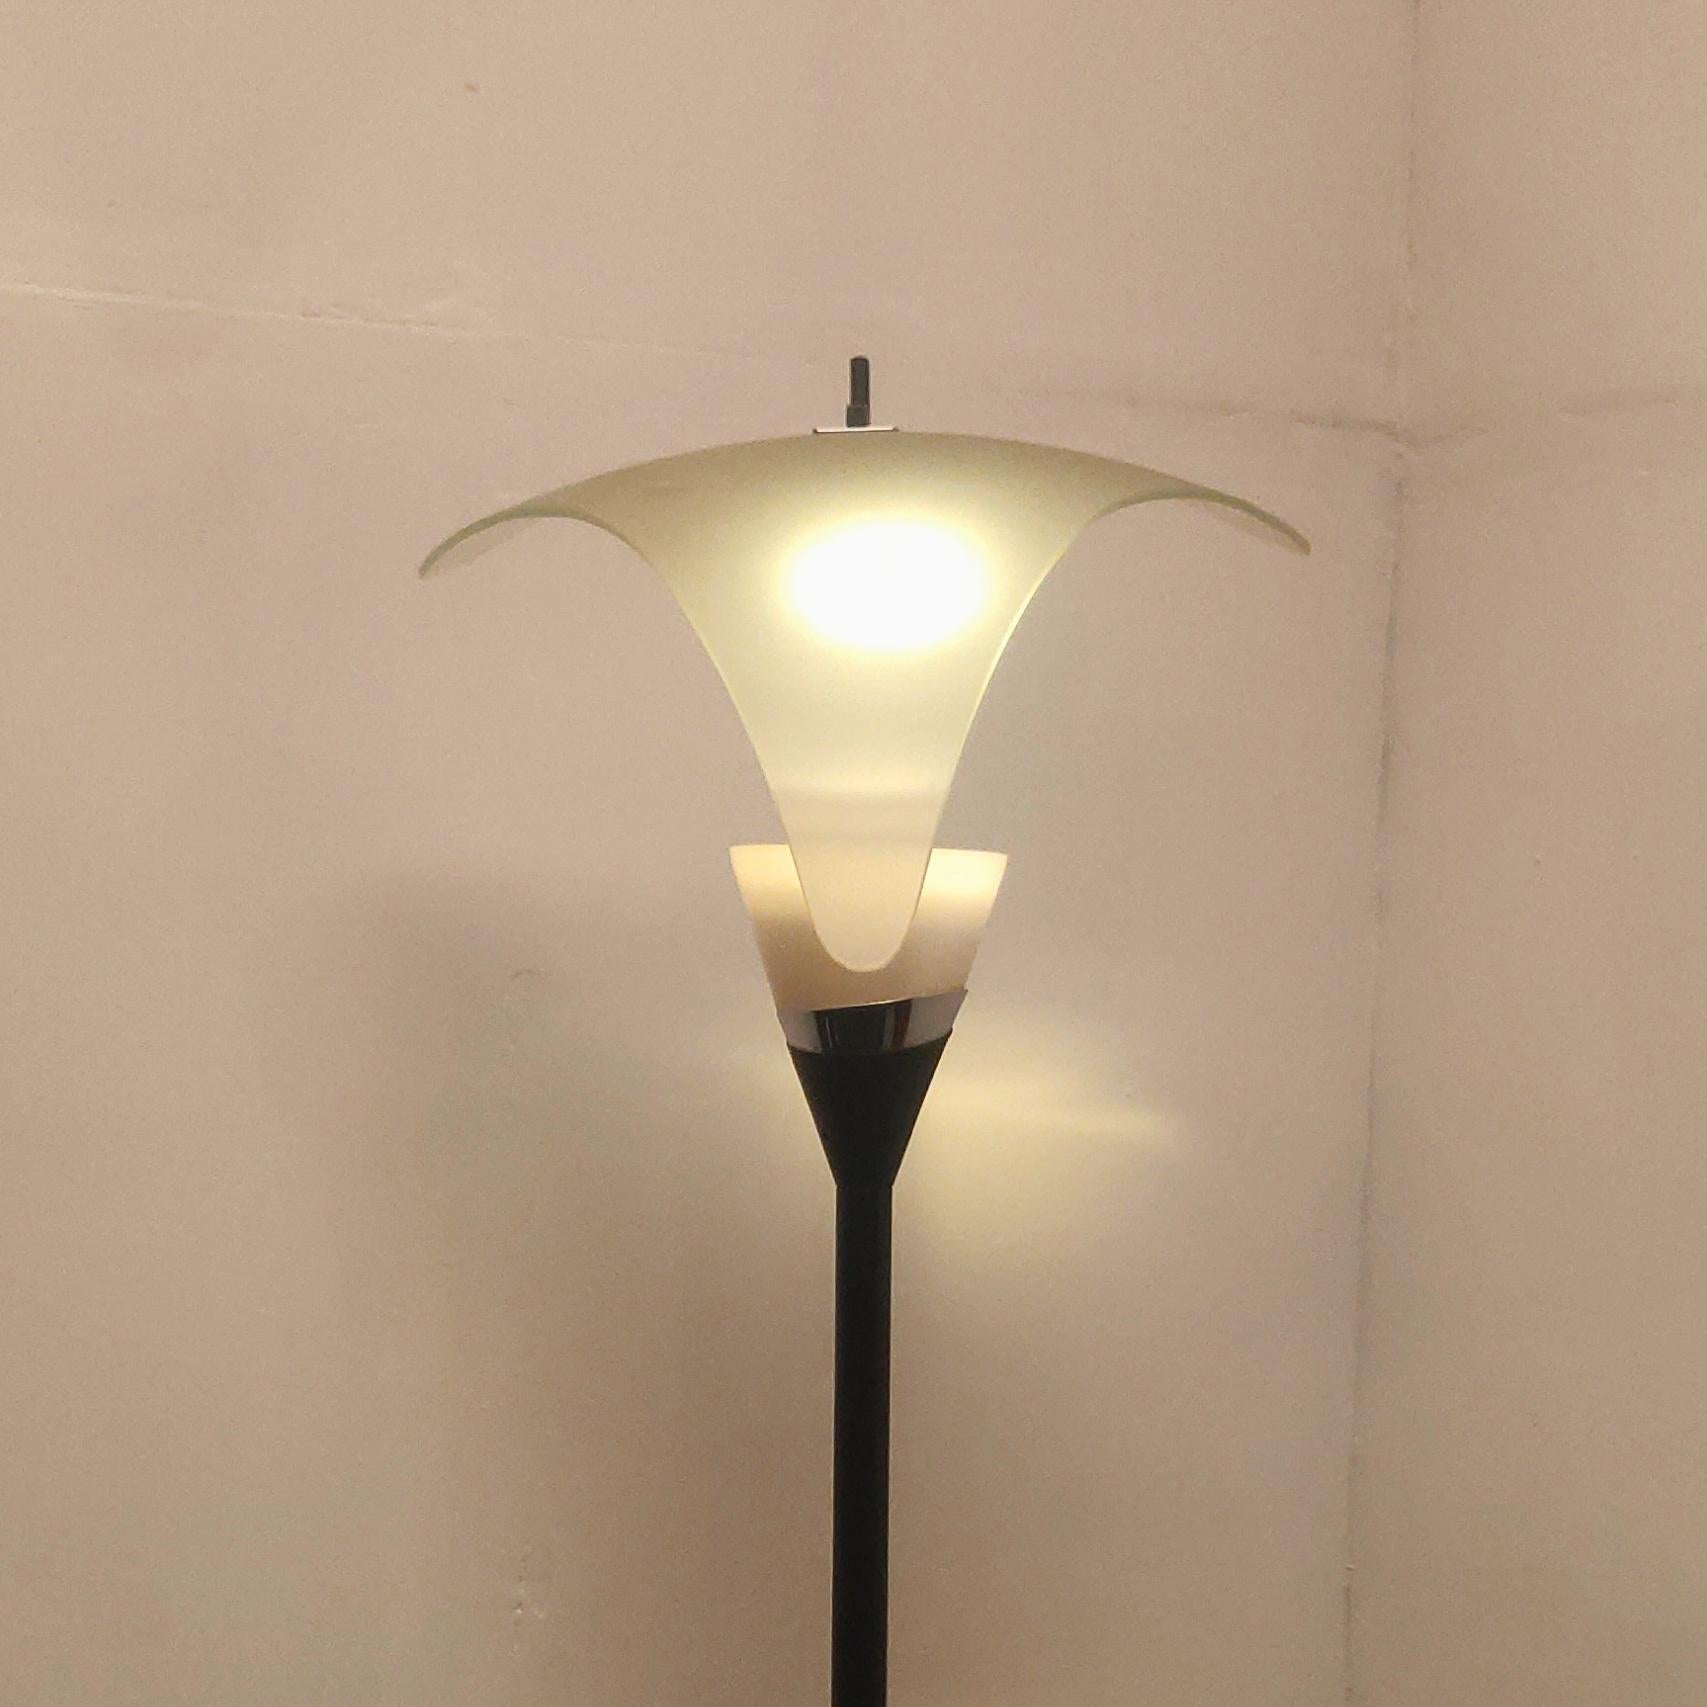 Rare Italian Reflecting Glass Floor Lamp, 1970s In Good Condition For Sale In MIJDRECHT, NL